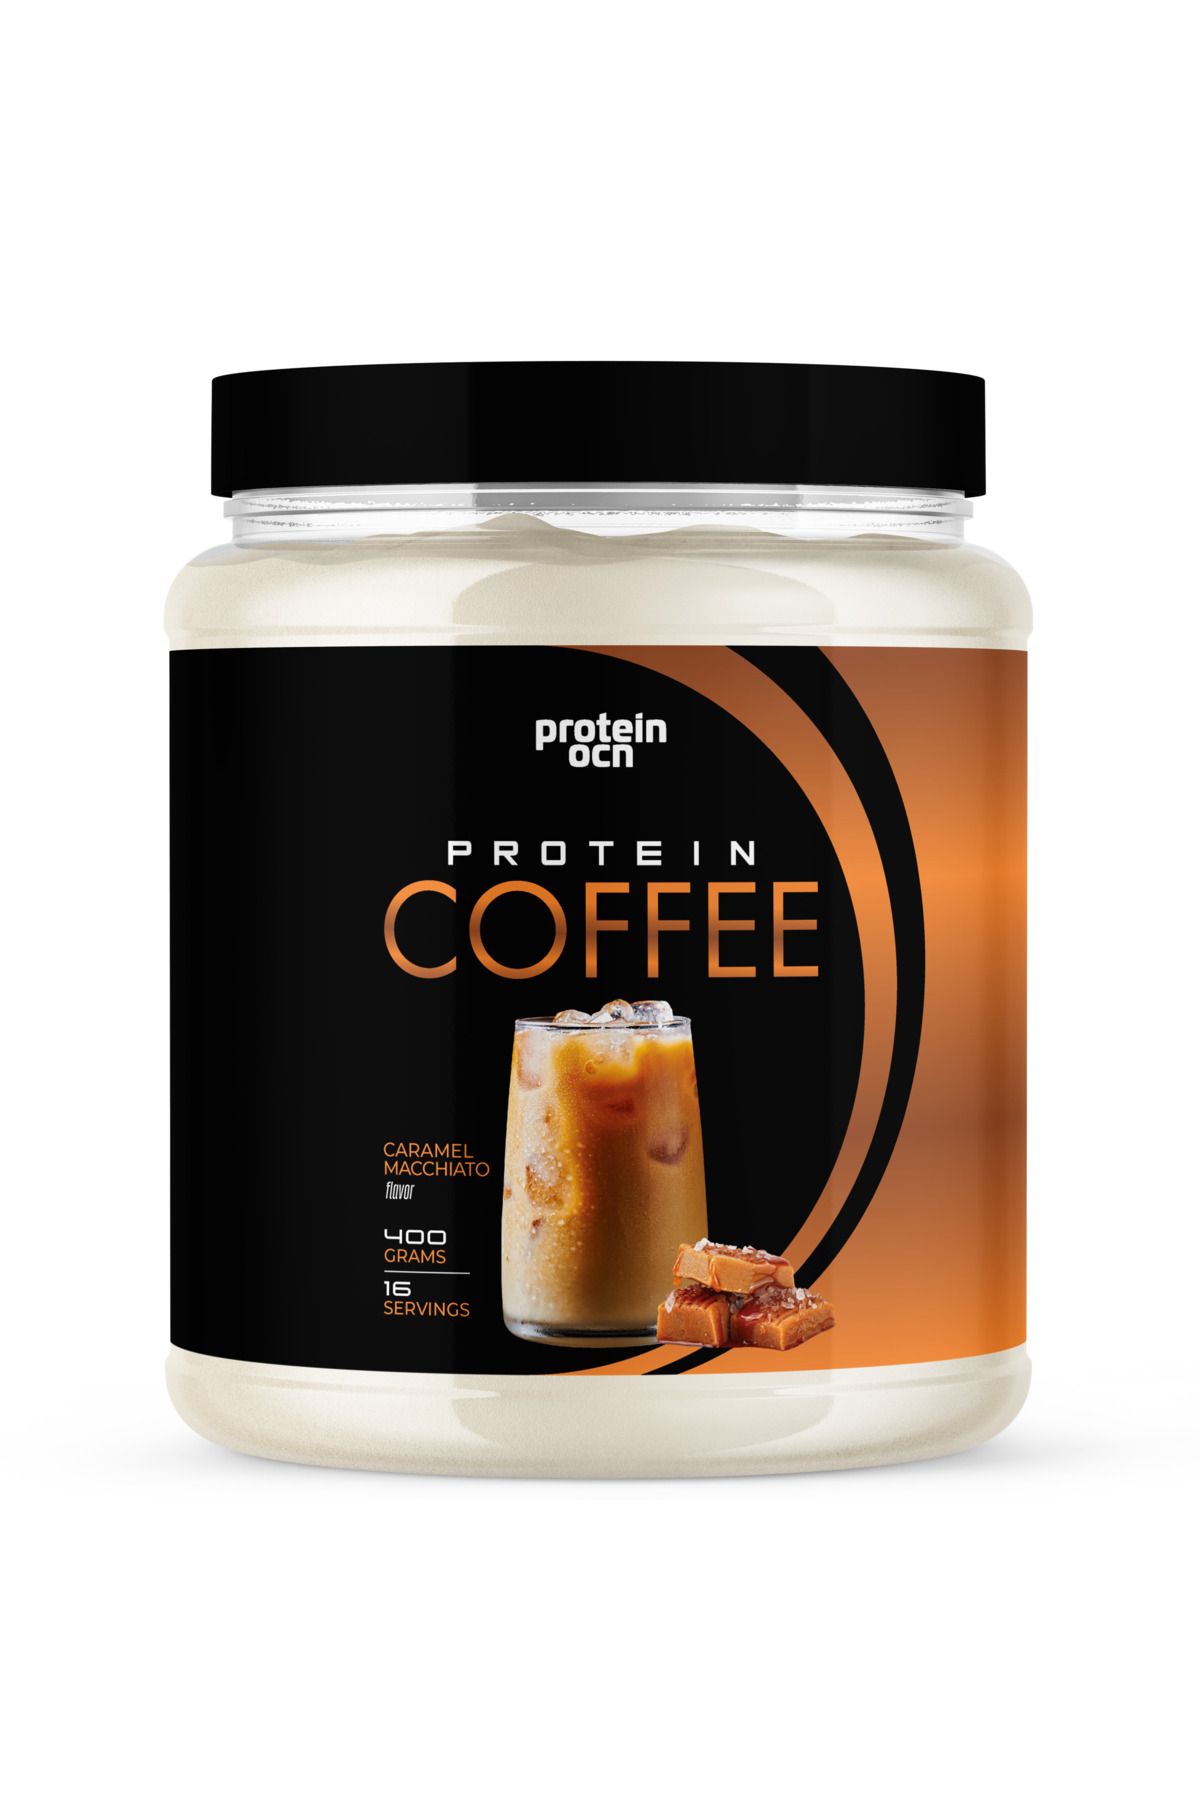 Proteinocean PROTEİN COFFEE Caramel Macchiato - 400g - 16 servis